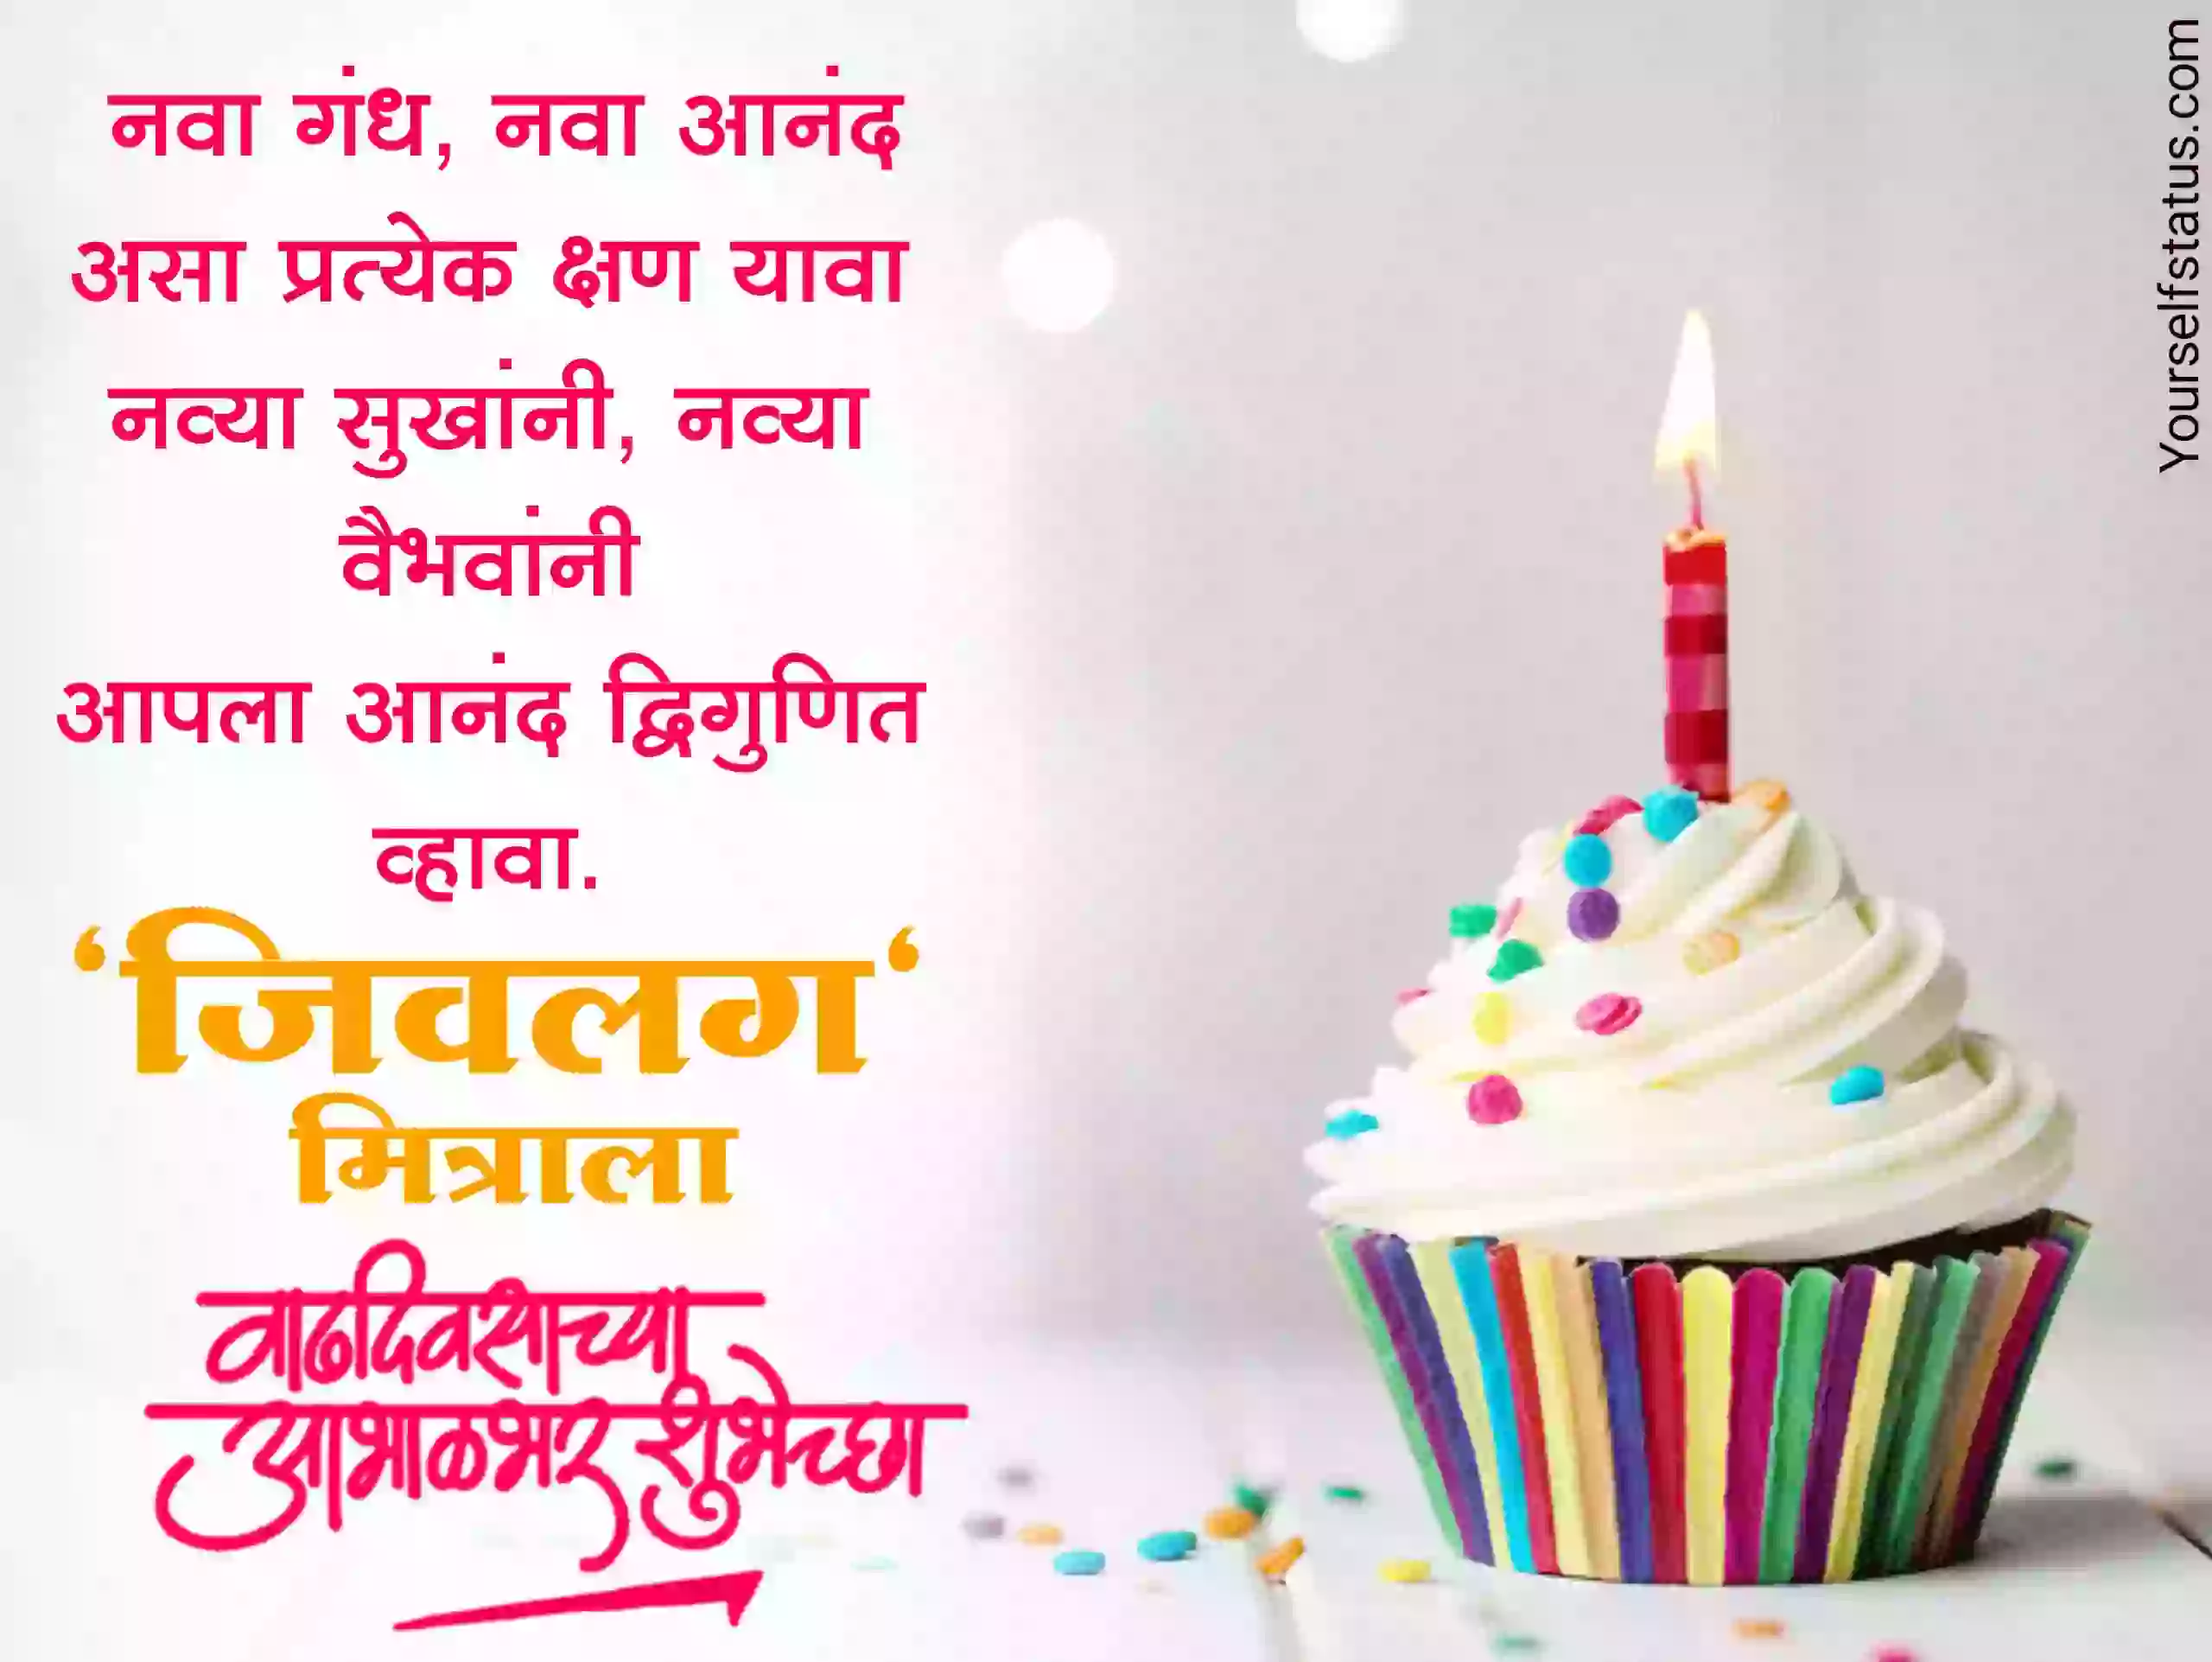 Birthday wishes for friend in marathi